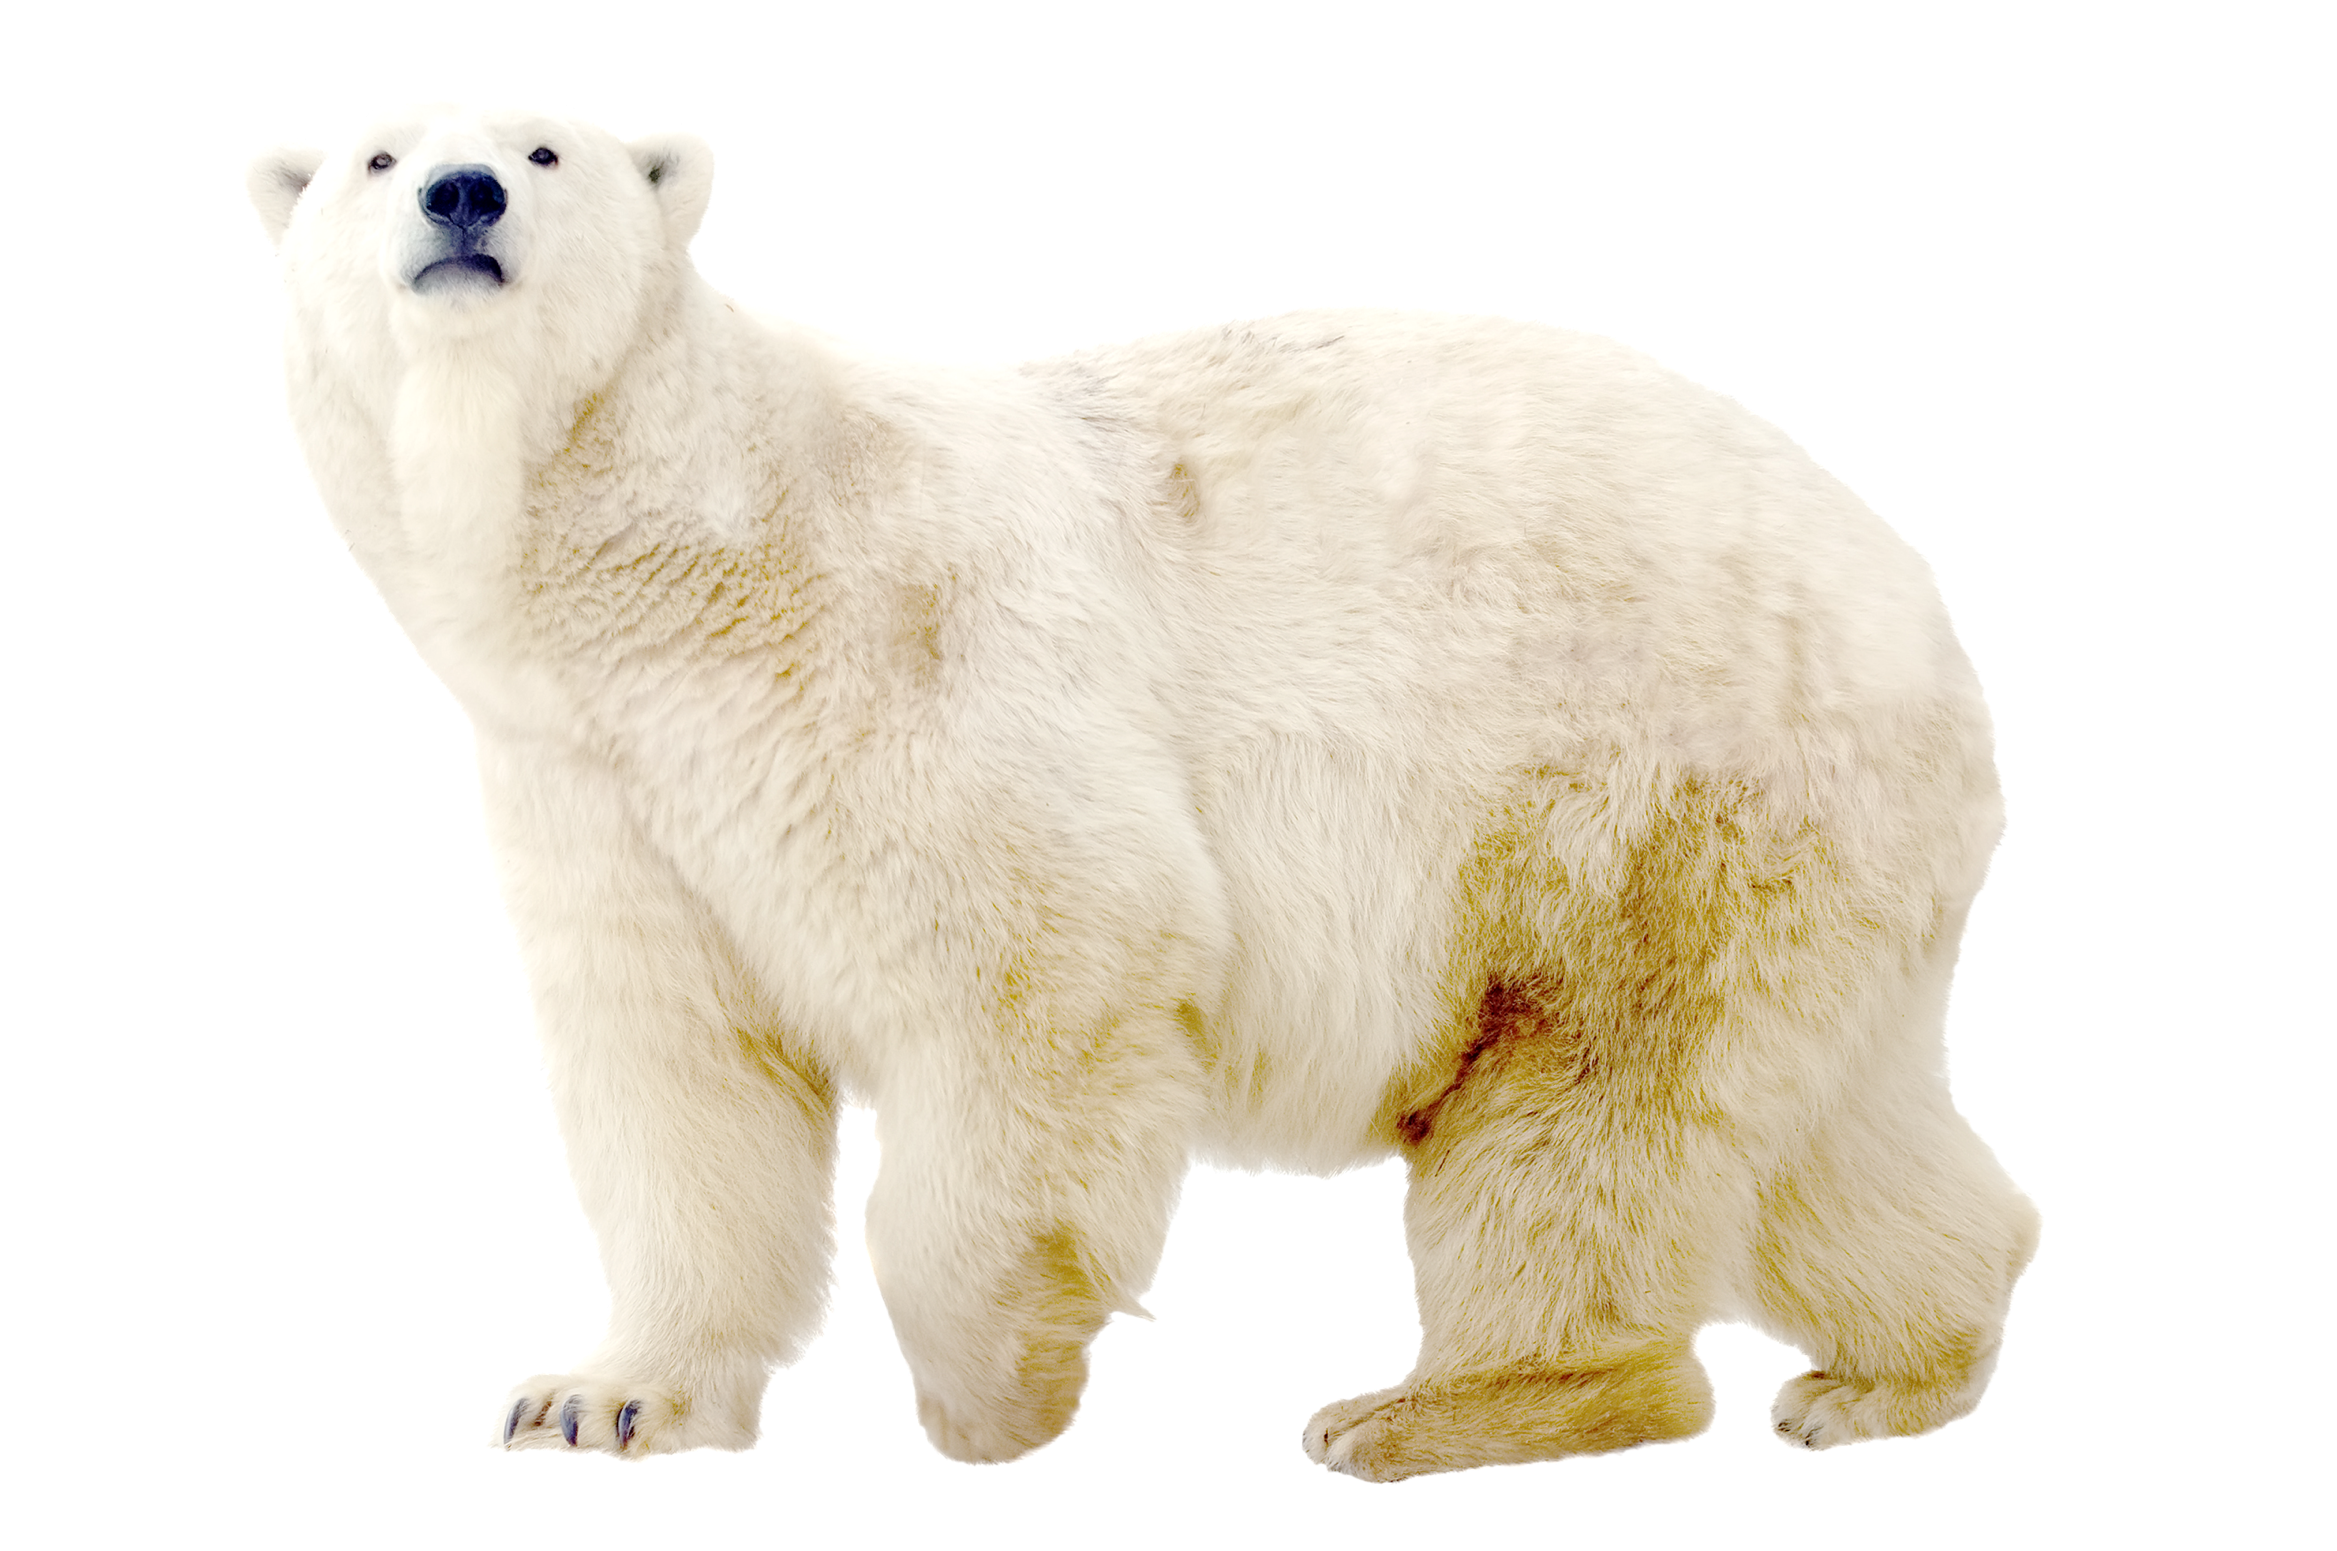 A Polar Bear Standing On A Black Background